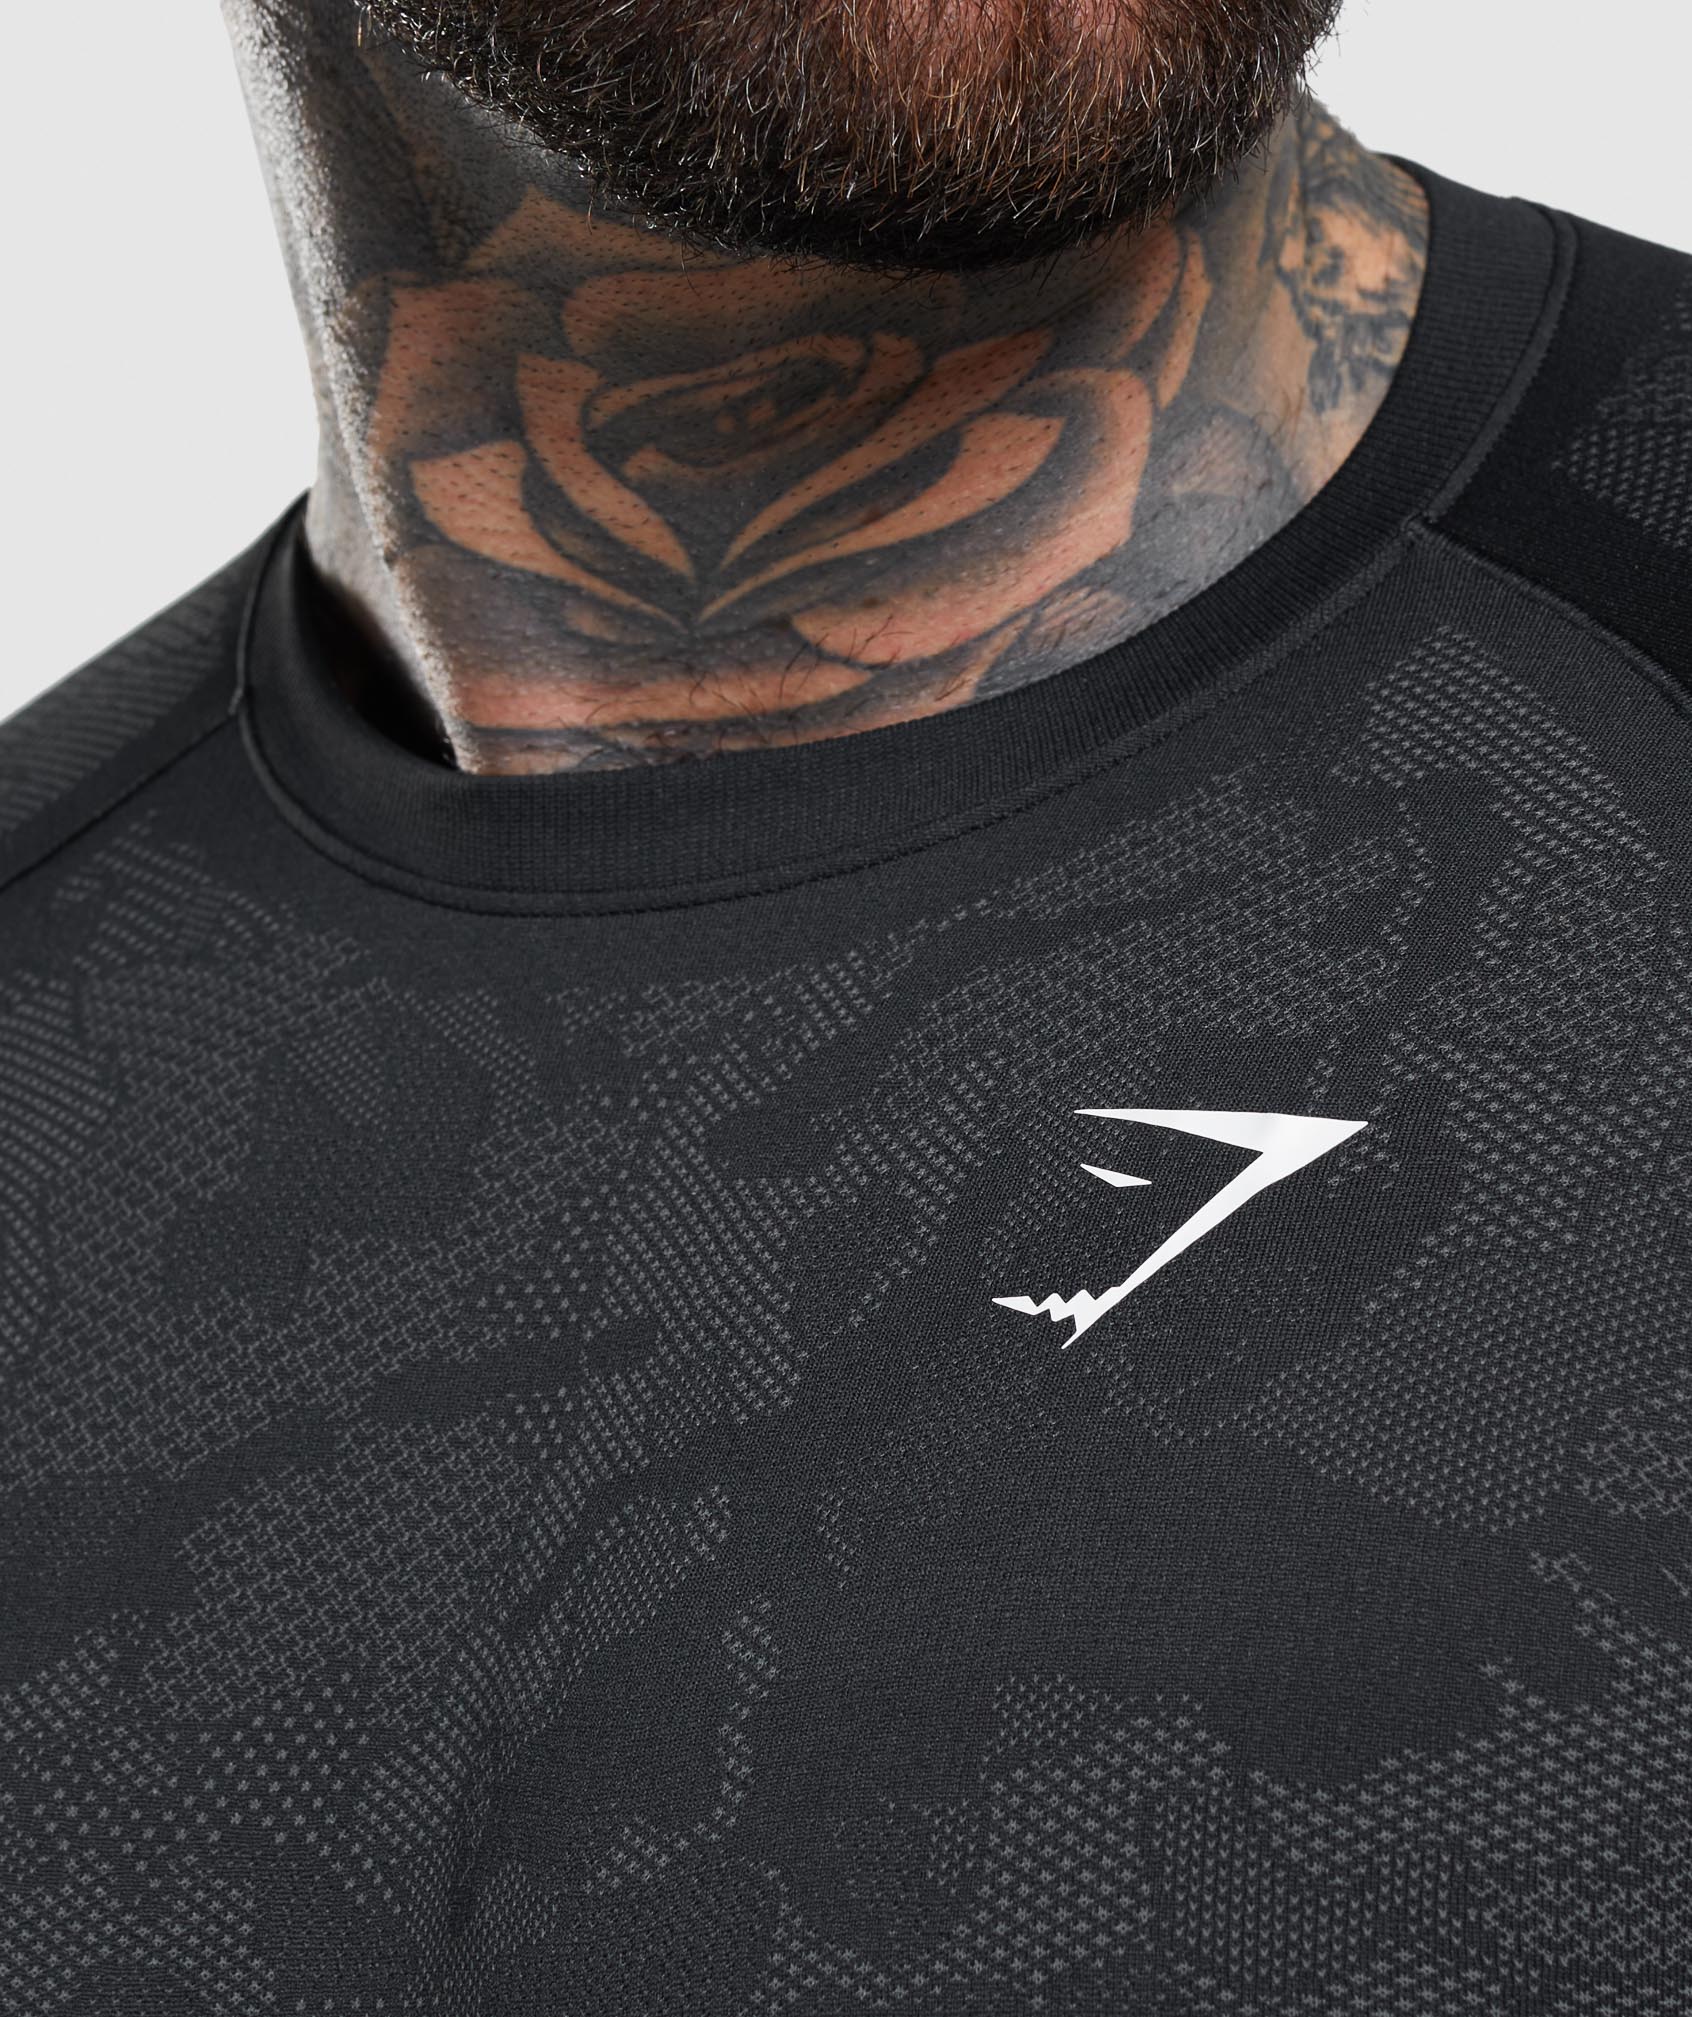 Geo Seamless Long Sleeve T-Shirt in Black/Charcoal Grey